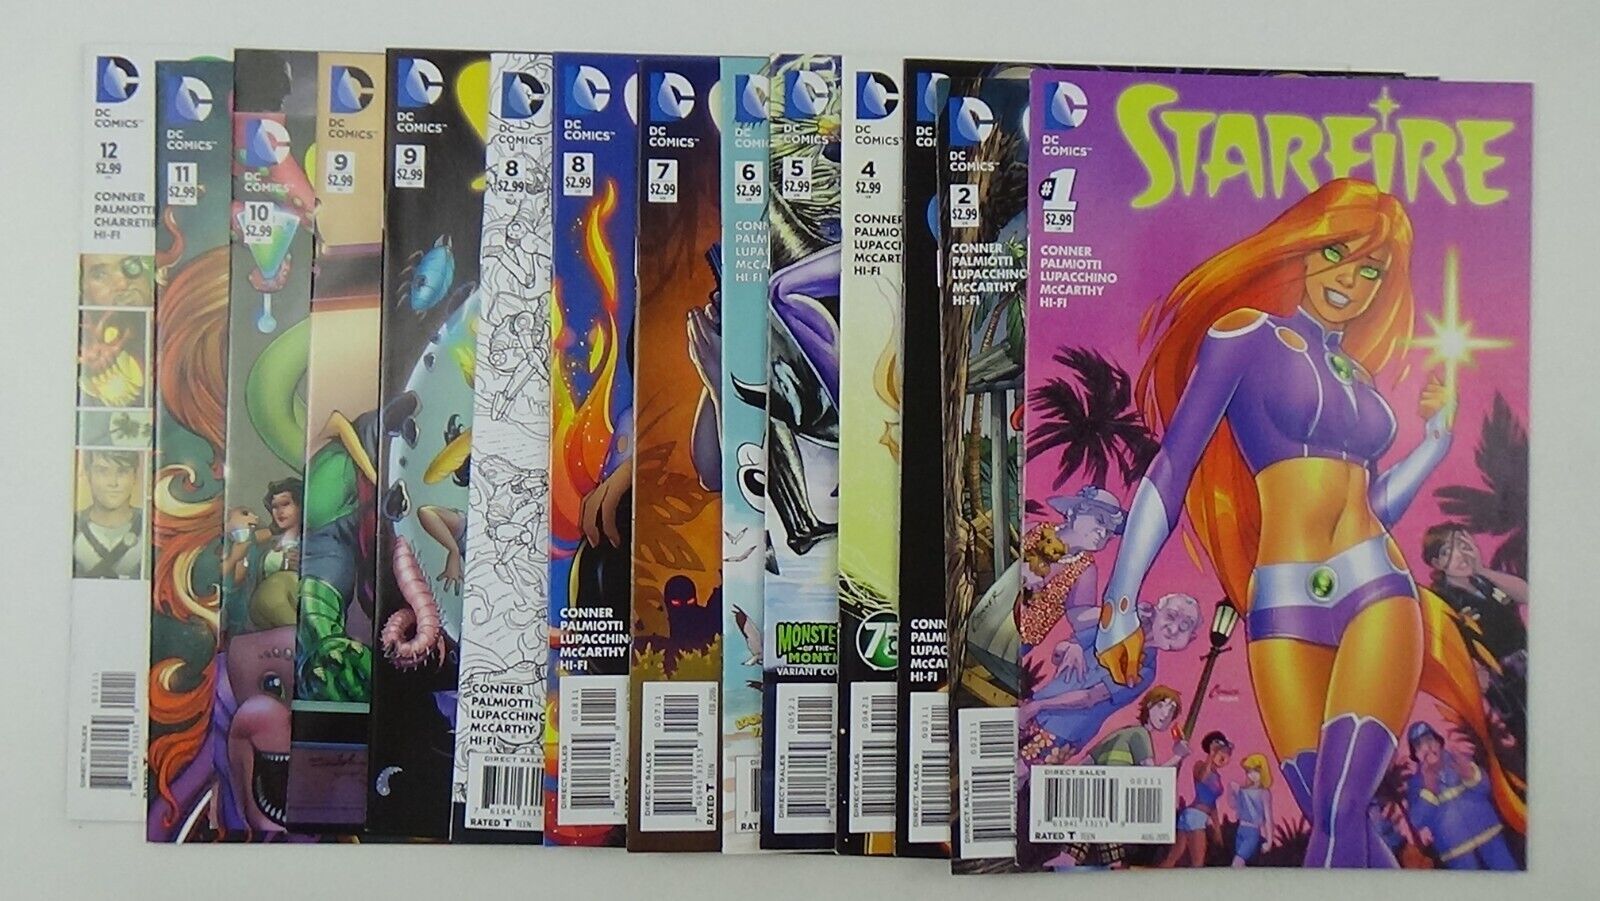 Starfire #1-12 Set + 2 extra copies (DC Comics, 2015) #024-13